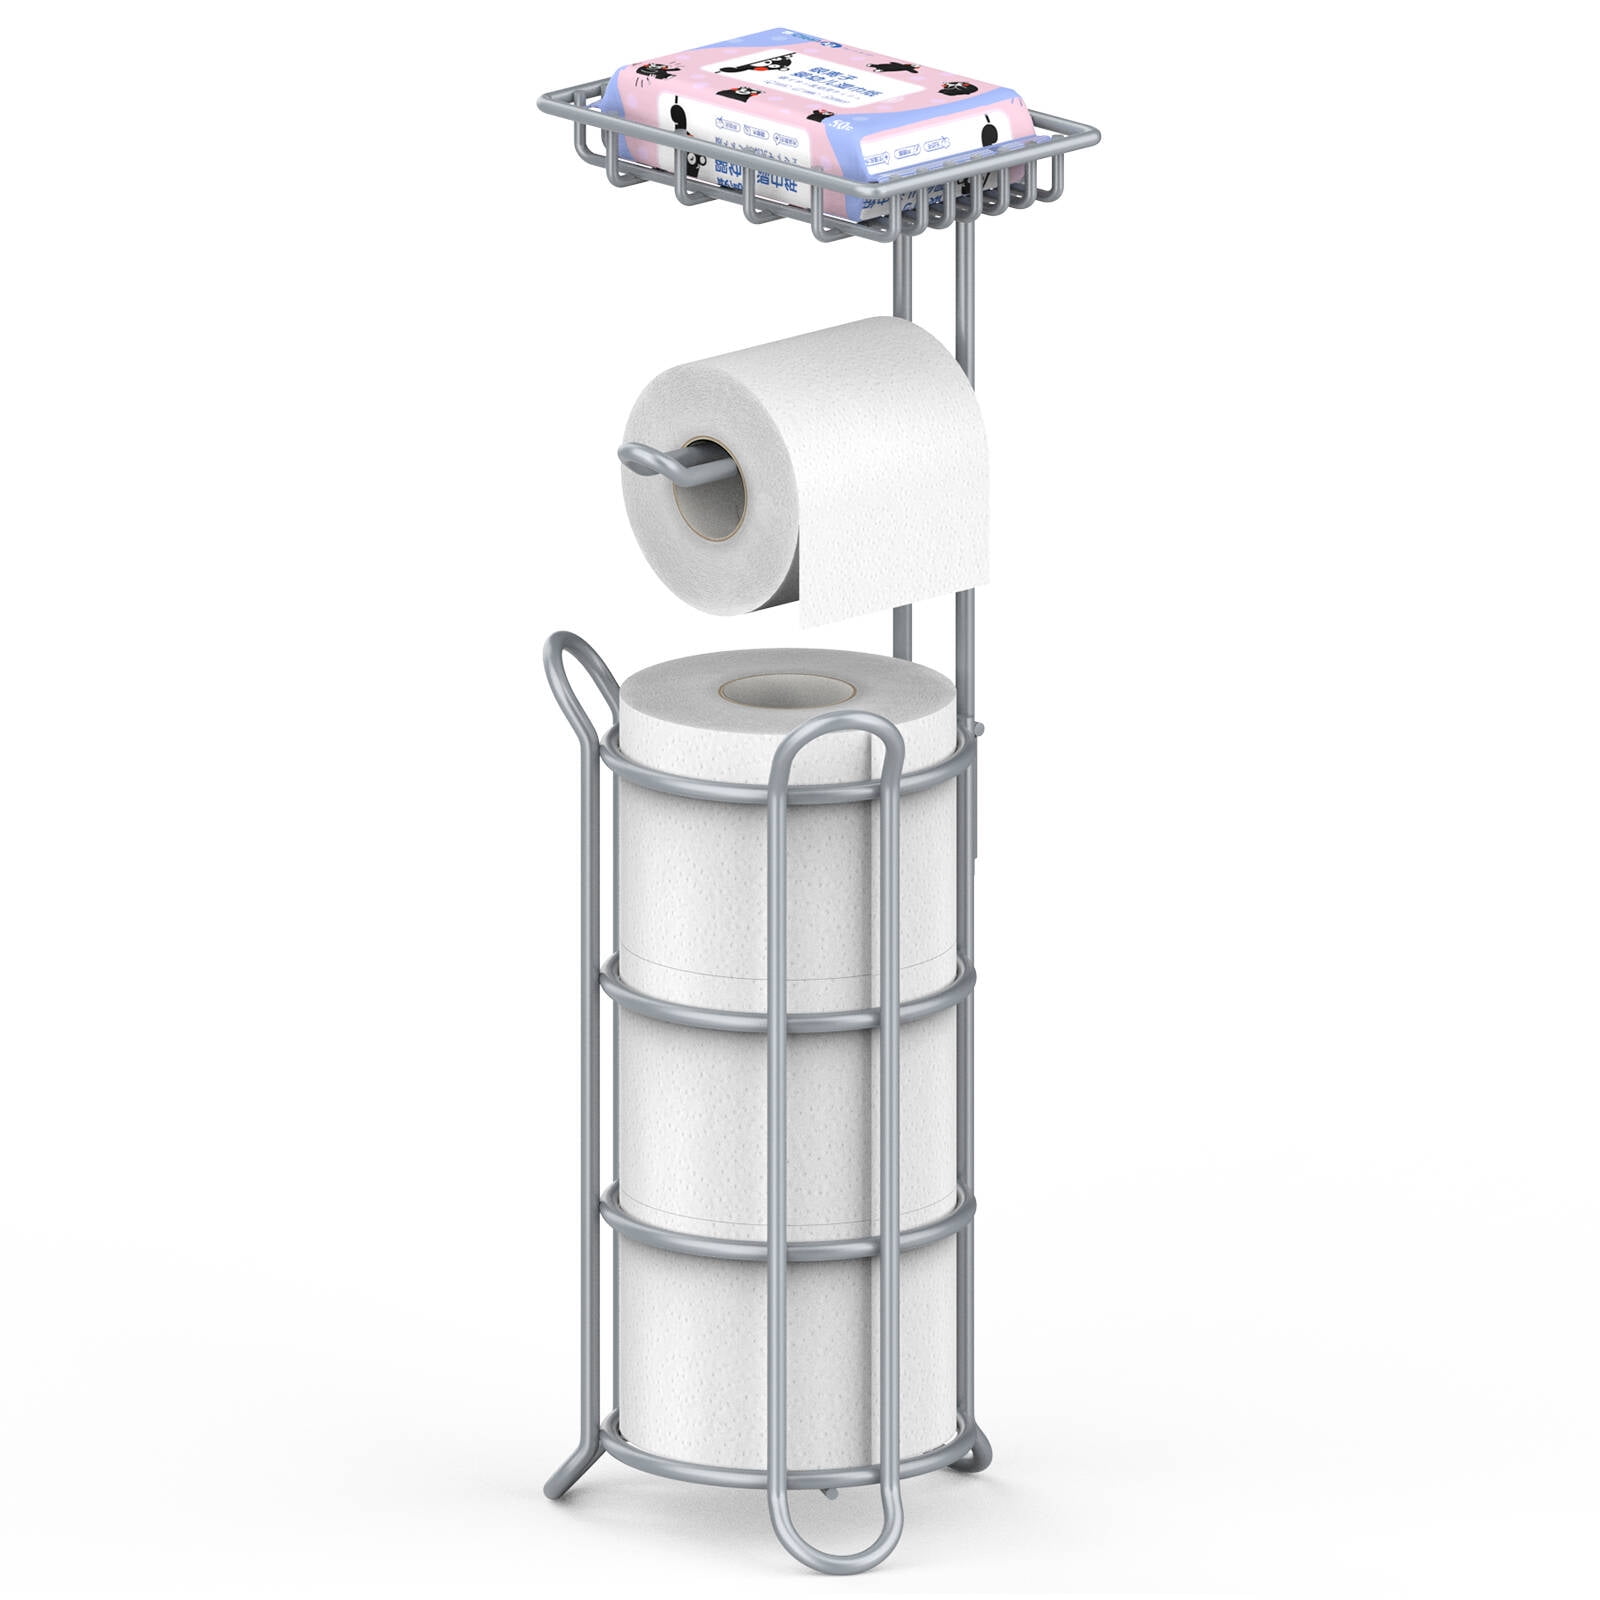 Heioov upgraded toilet paper holder stand for bathroom, holds 3